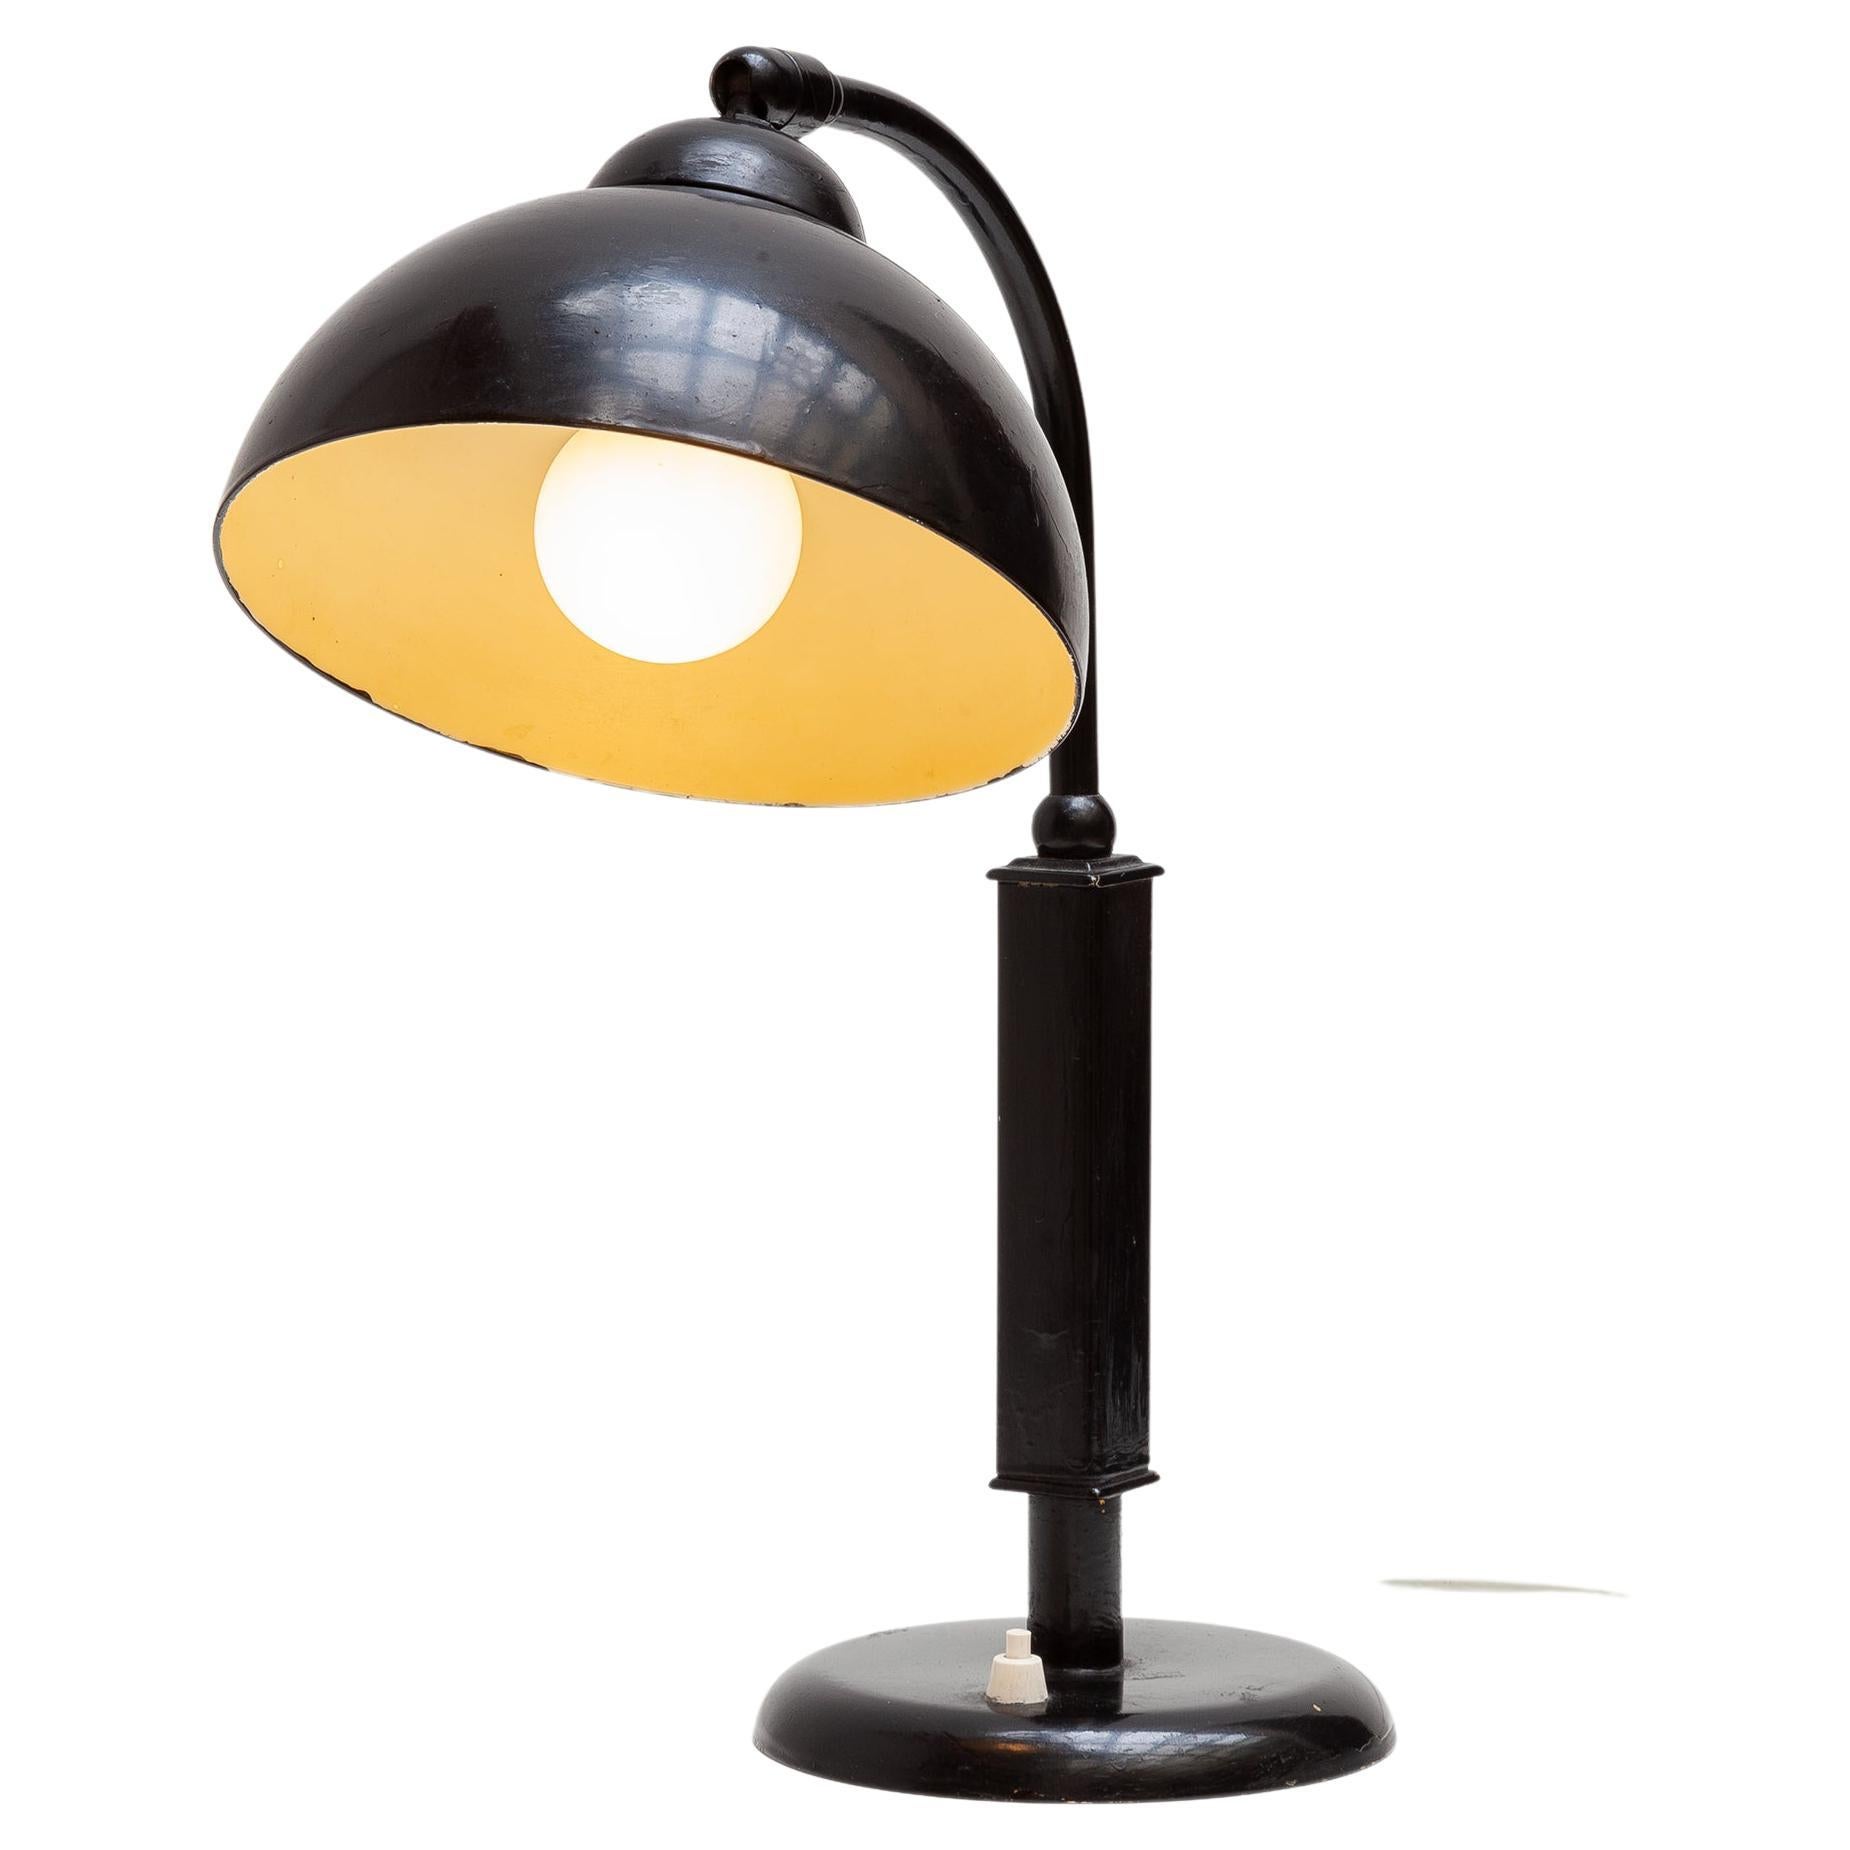 Christian Dell desk lamp by Kaiser 1930s design, Germany. Bauhaus desk lamp in enameled black metal and bakelite shade. Adjustable swan neck. Lit by 1 bulb.